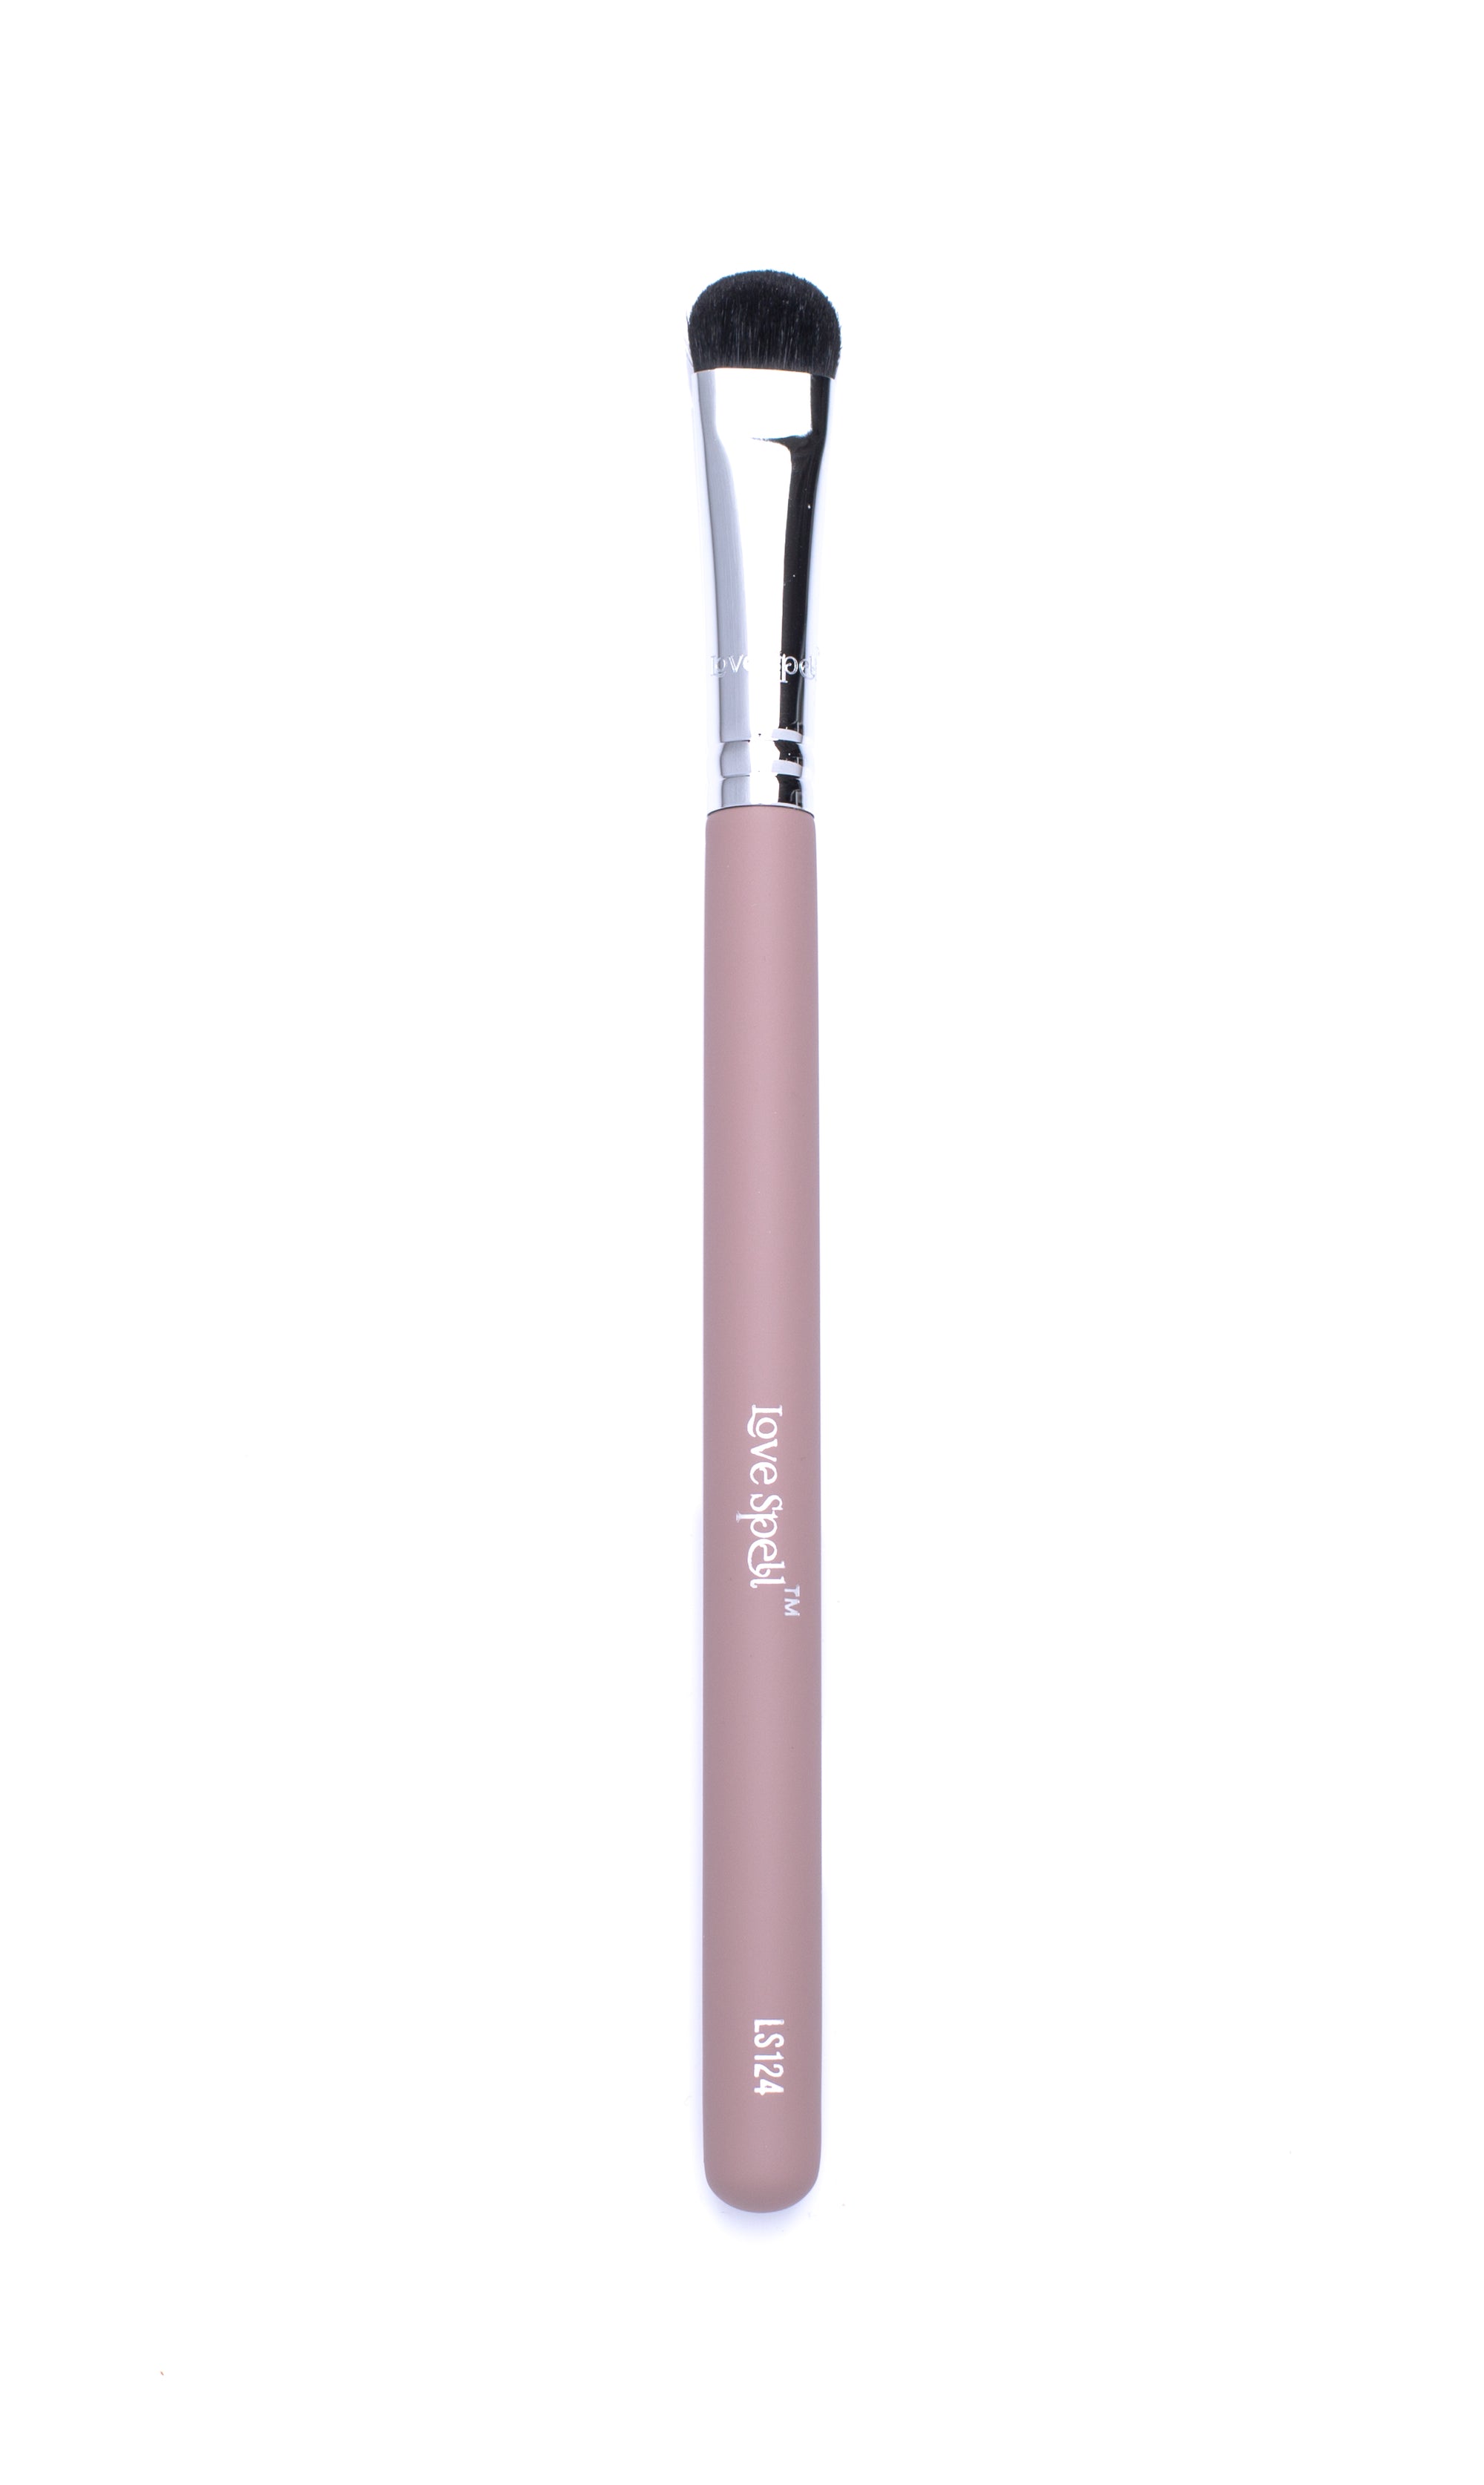 Sally's Spell - LS 124 large eyeshadow shading brush